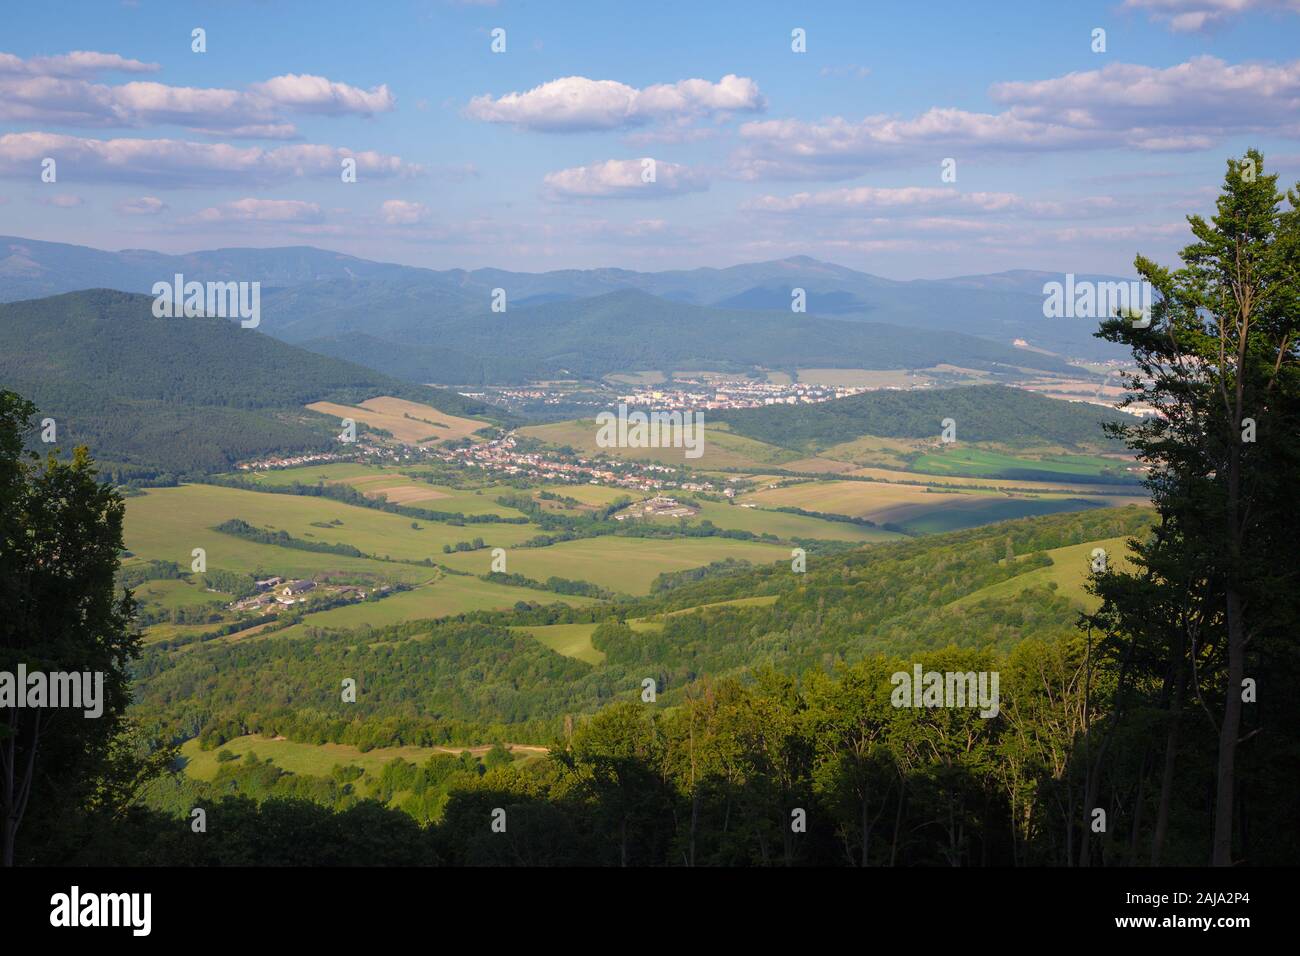 Slovakia - The view from Plesivecka planina plateau in national park Slovensky Kras to Roznava and Volovske vrchy mountains. Stock Photo